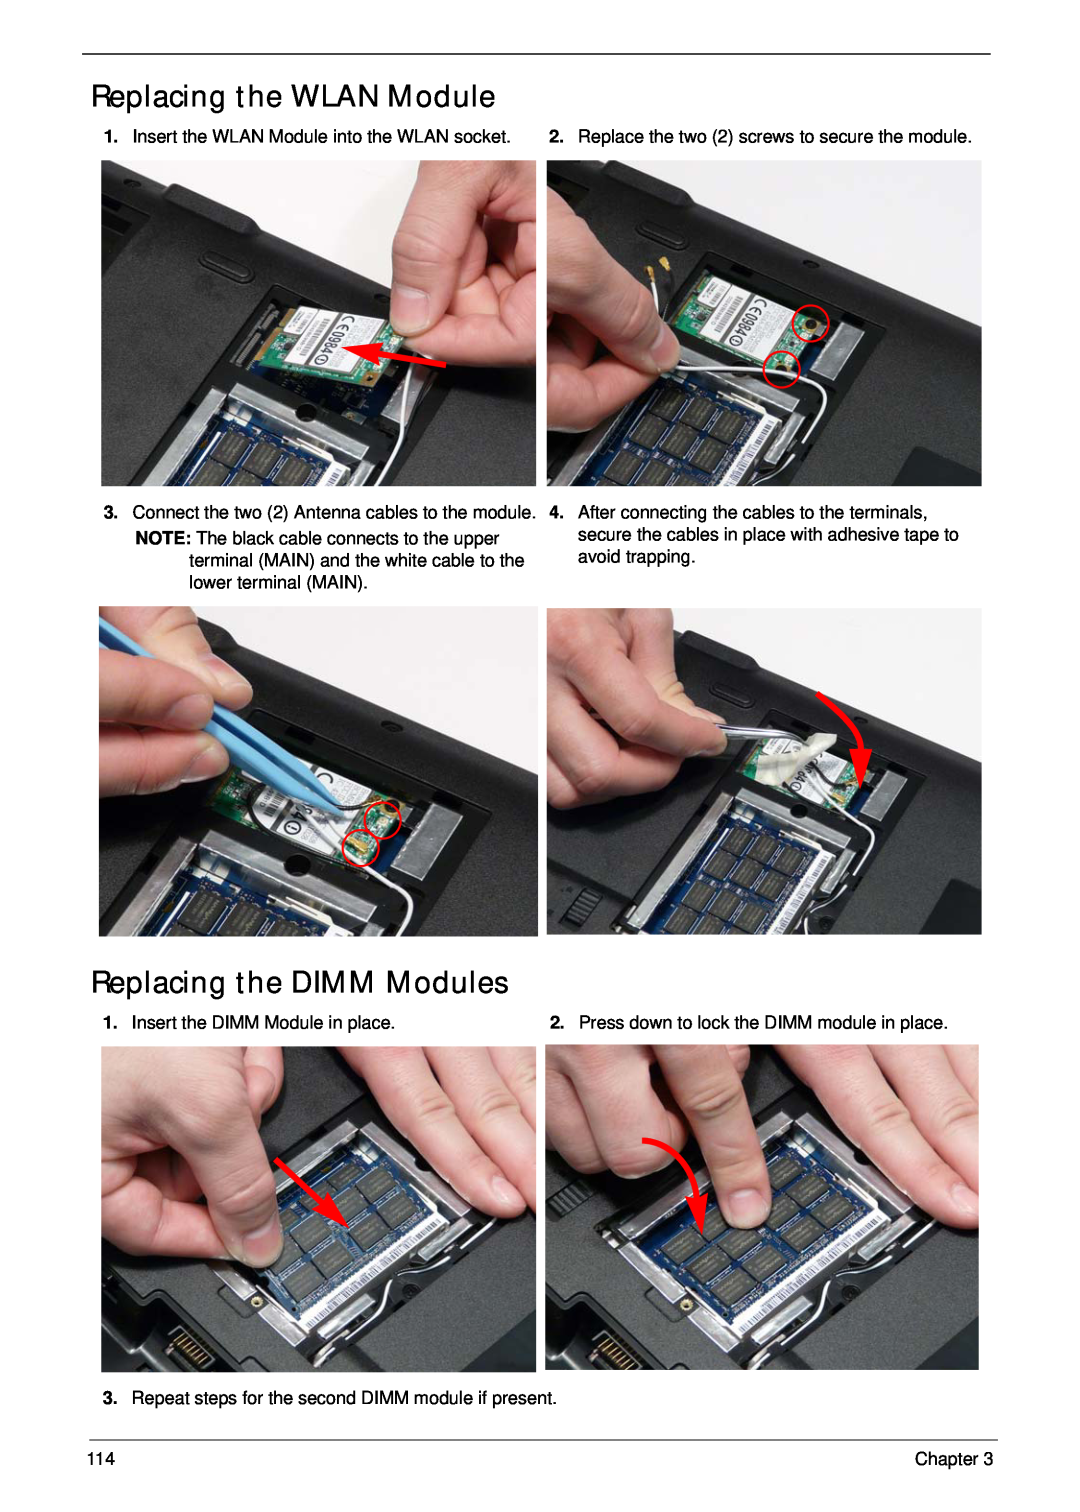 Acer 5532 manual Replacing the WLAN Module, Replacing the DIMM Modules, Insert the DIMM Module in place 